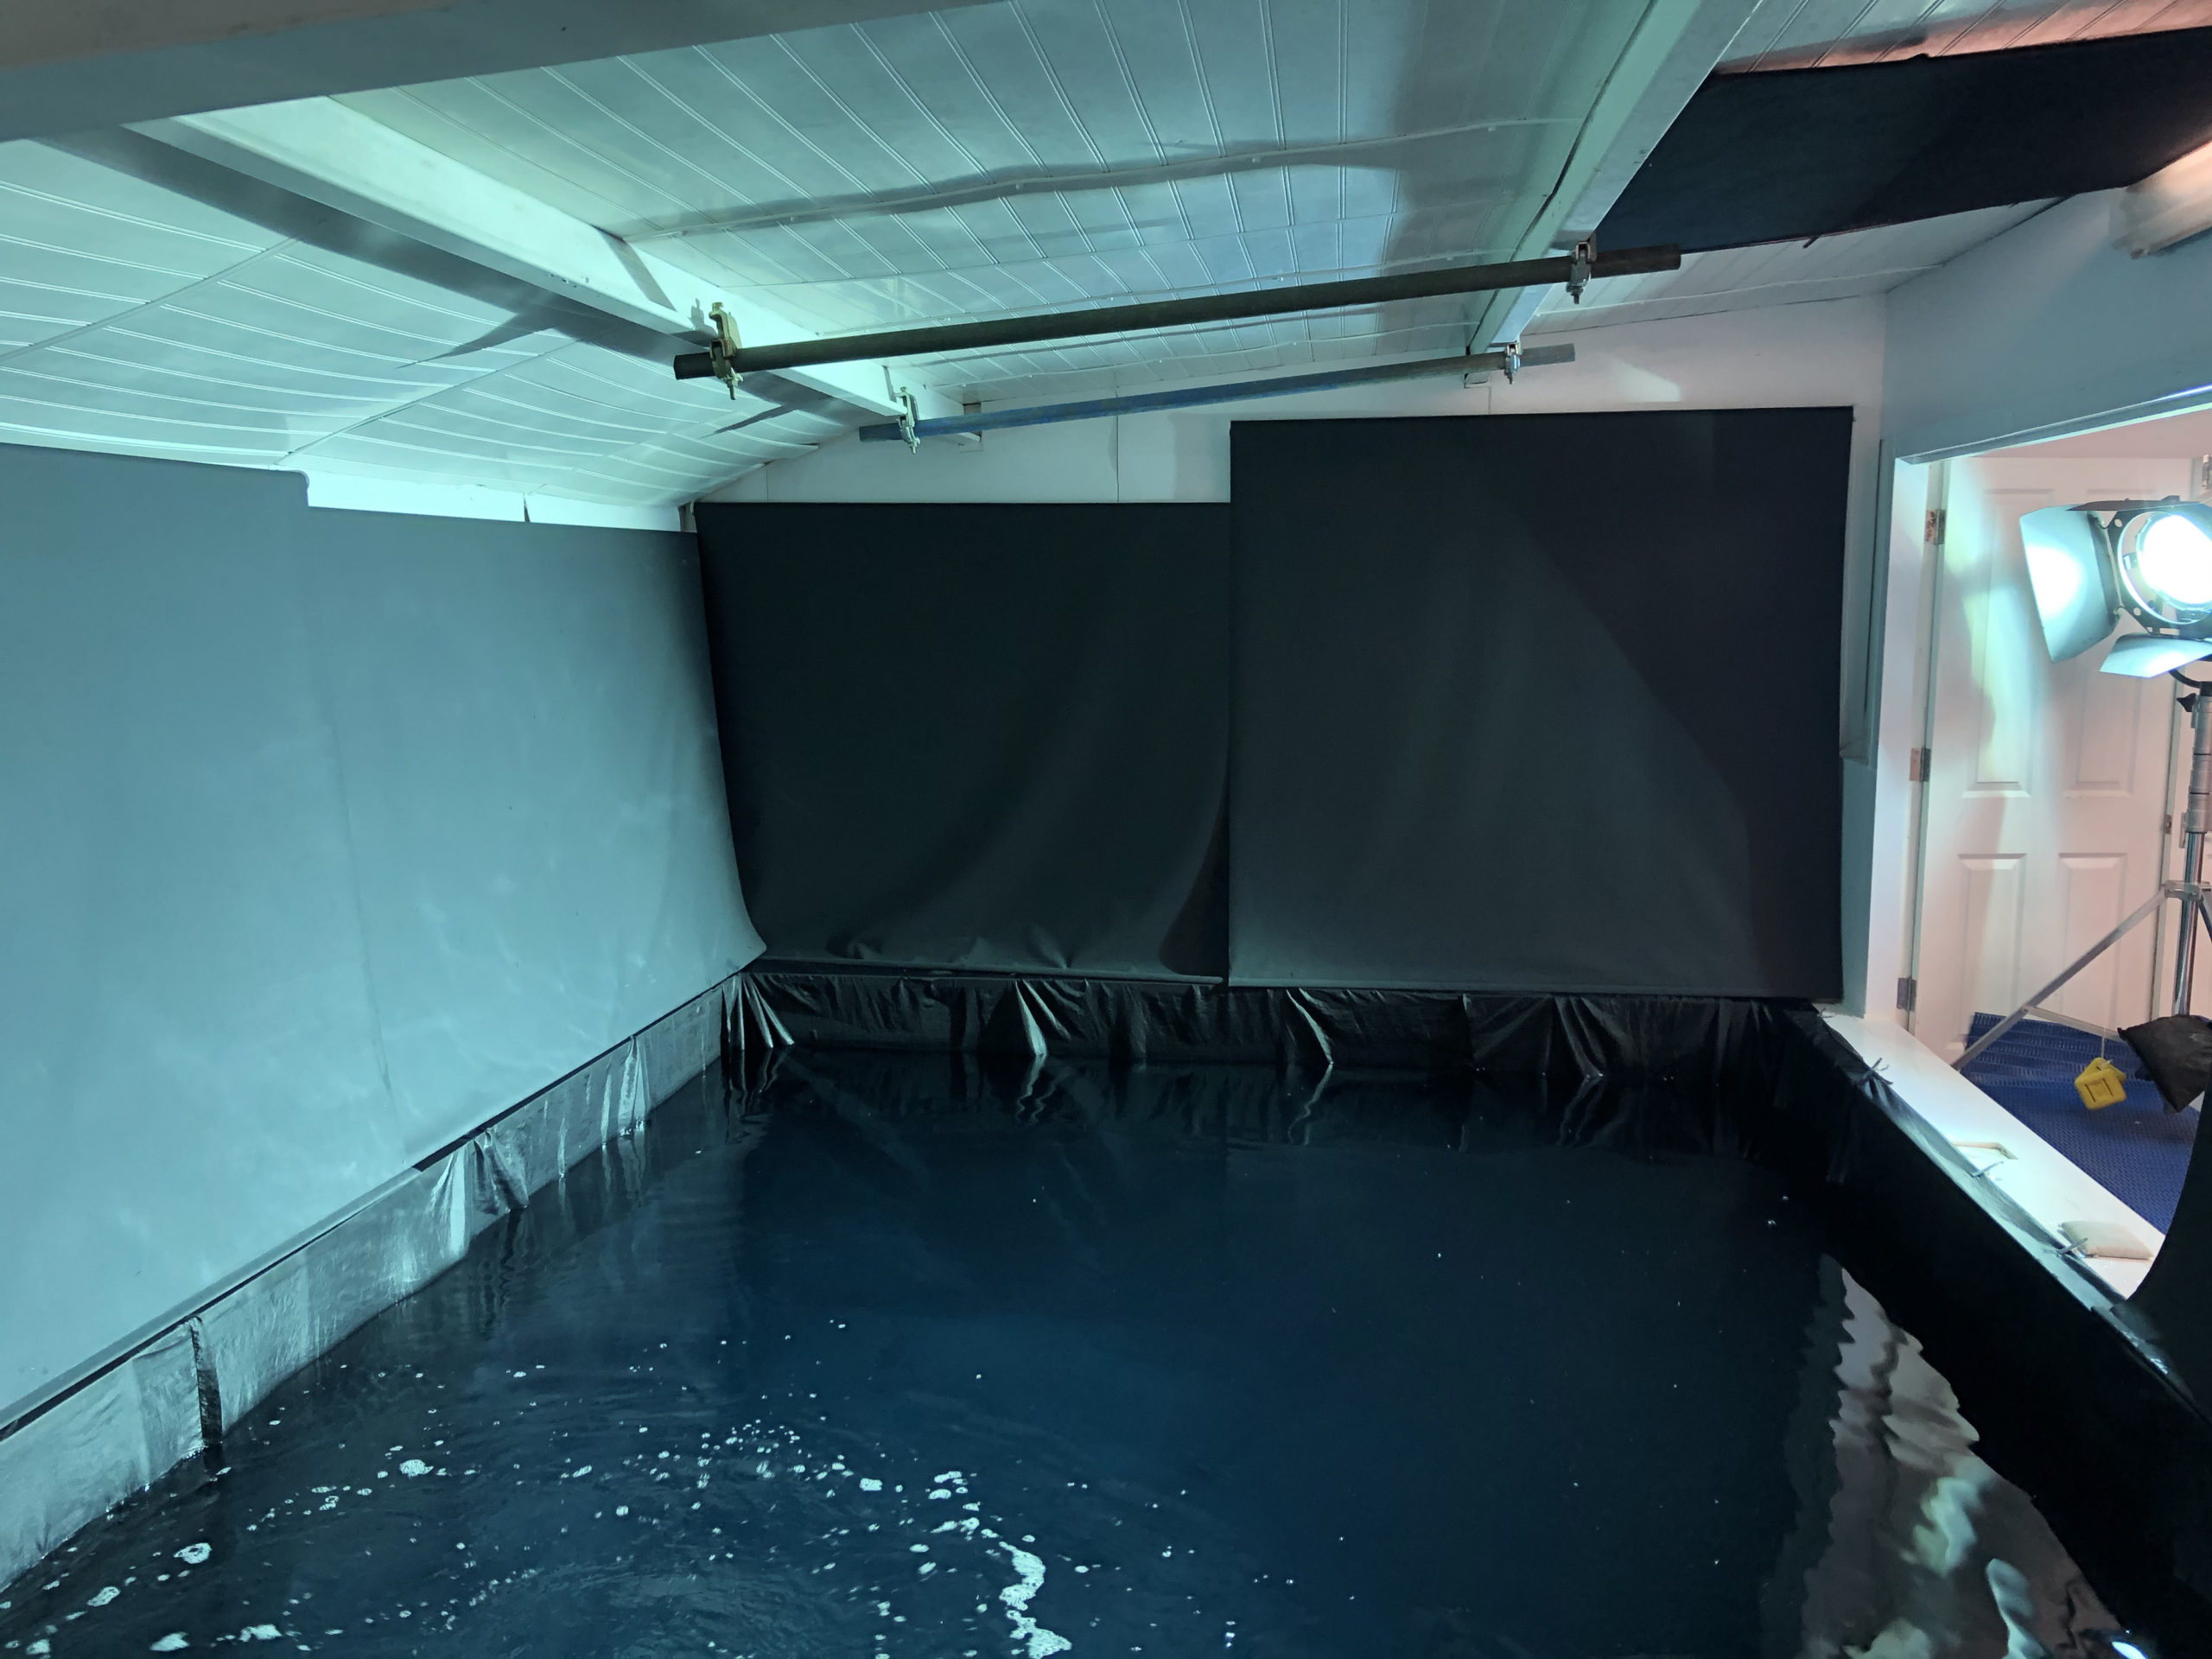 The Underwater Studio